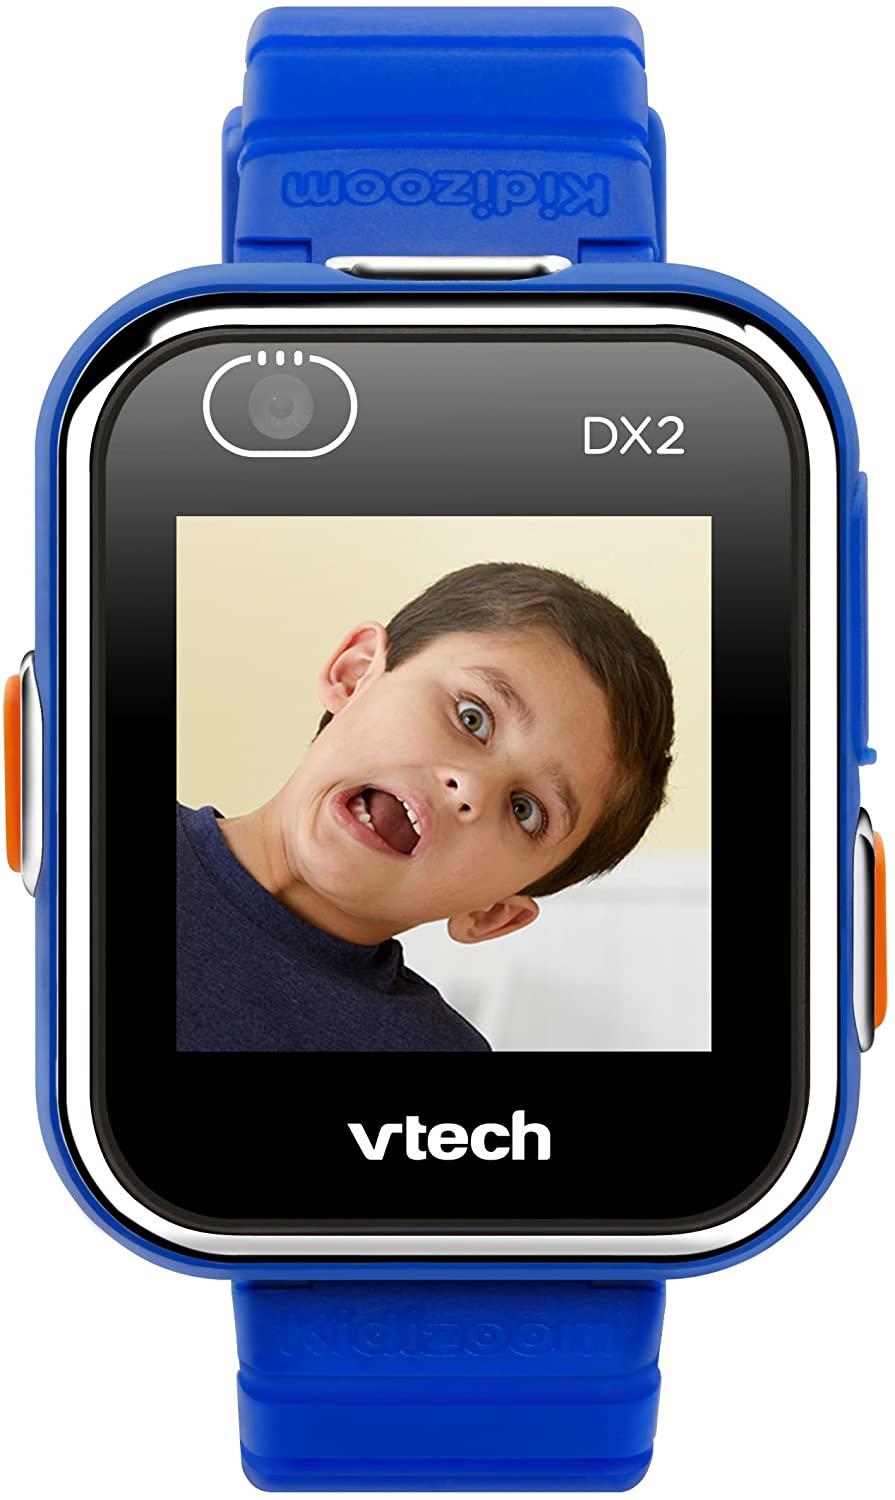 Vtech Kidizoom DX2 Smart Watch Blue Toymaster Ballina